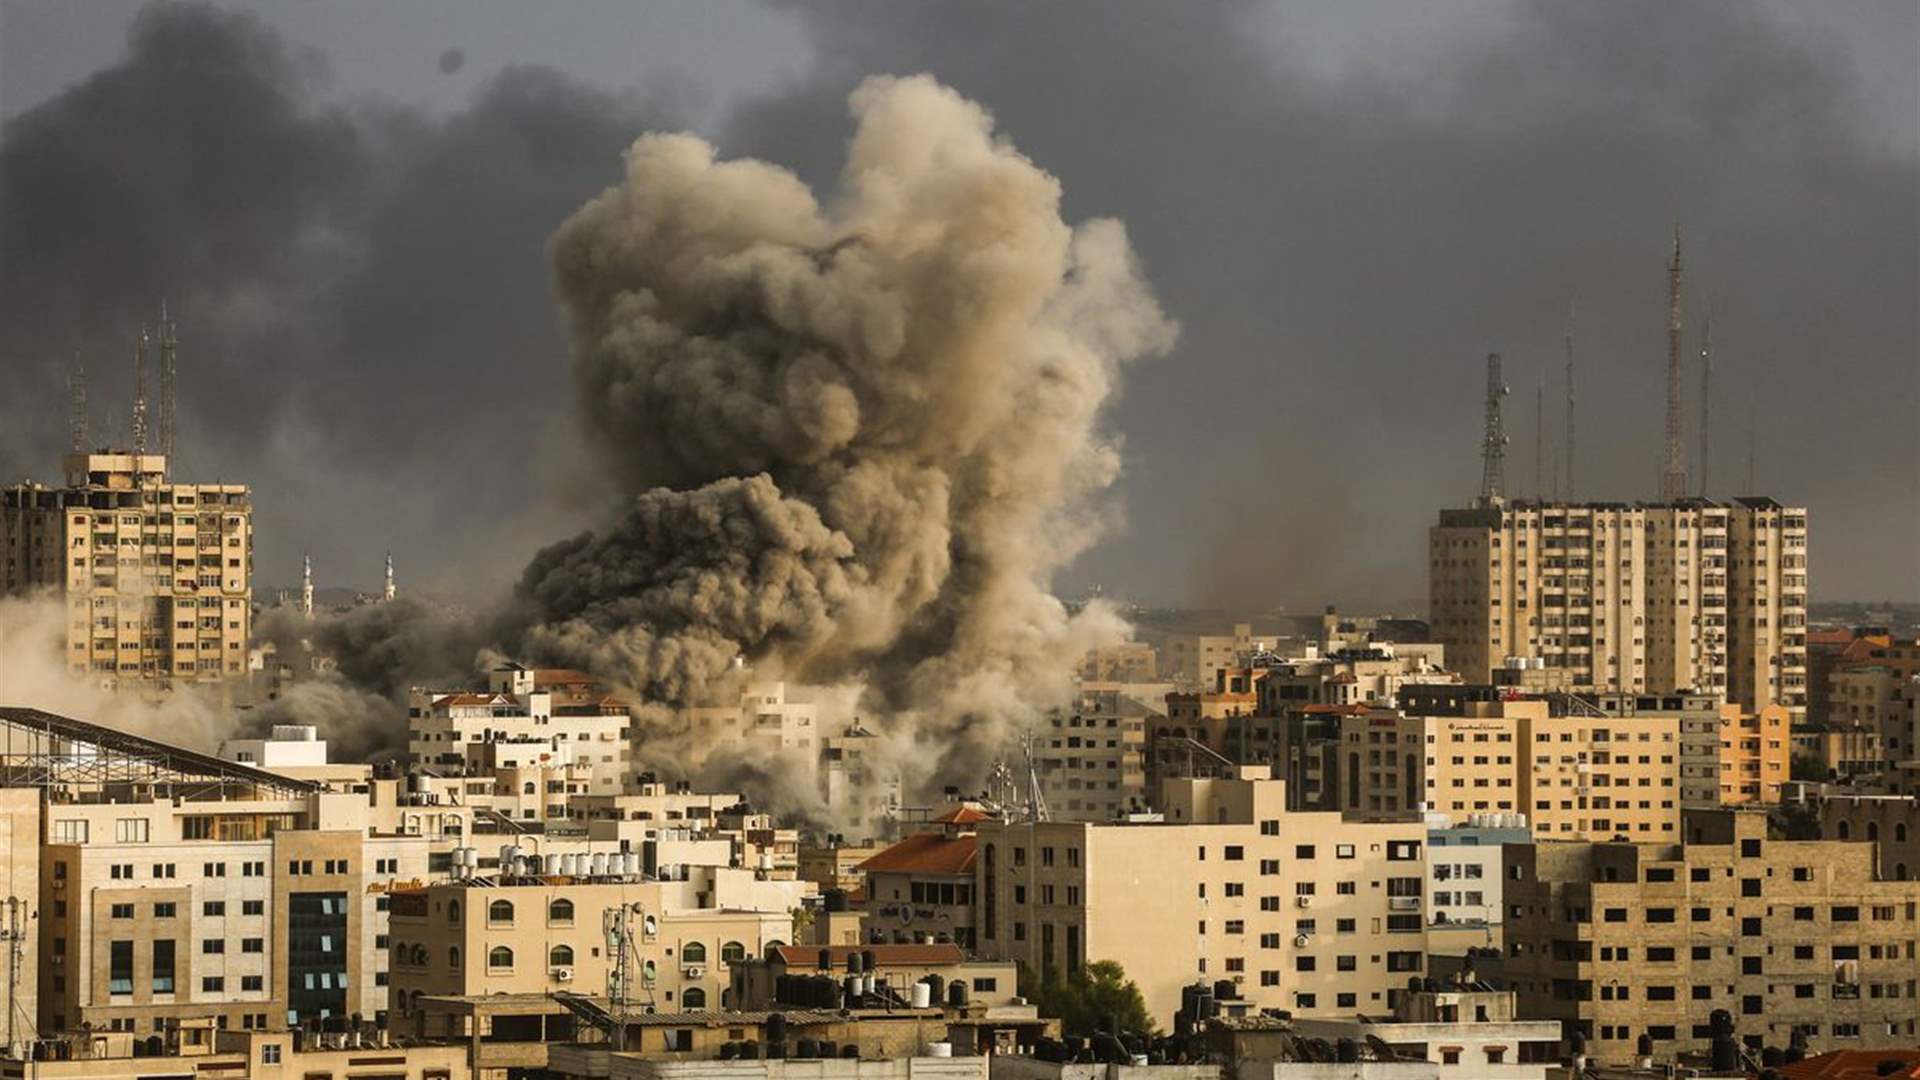 Al Jazeera: Brother of Hamas military commander killed in airstrike